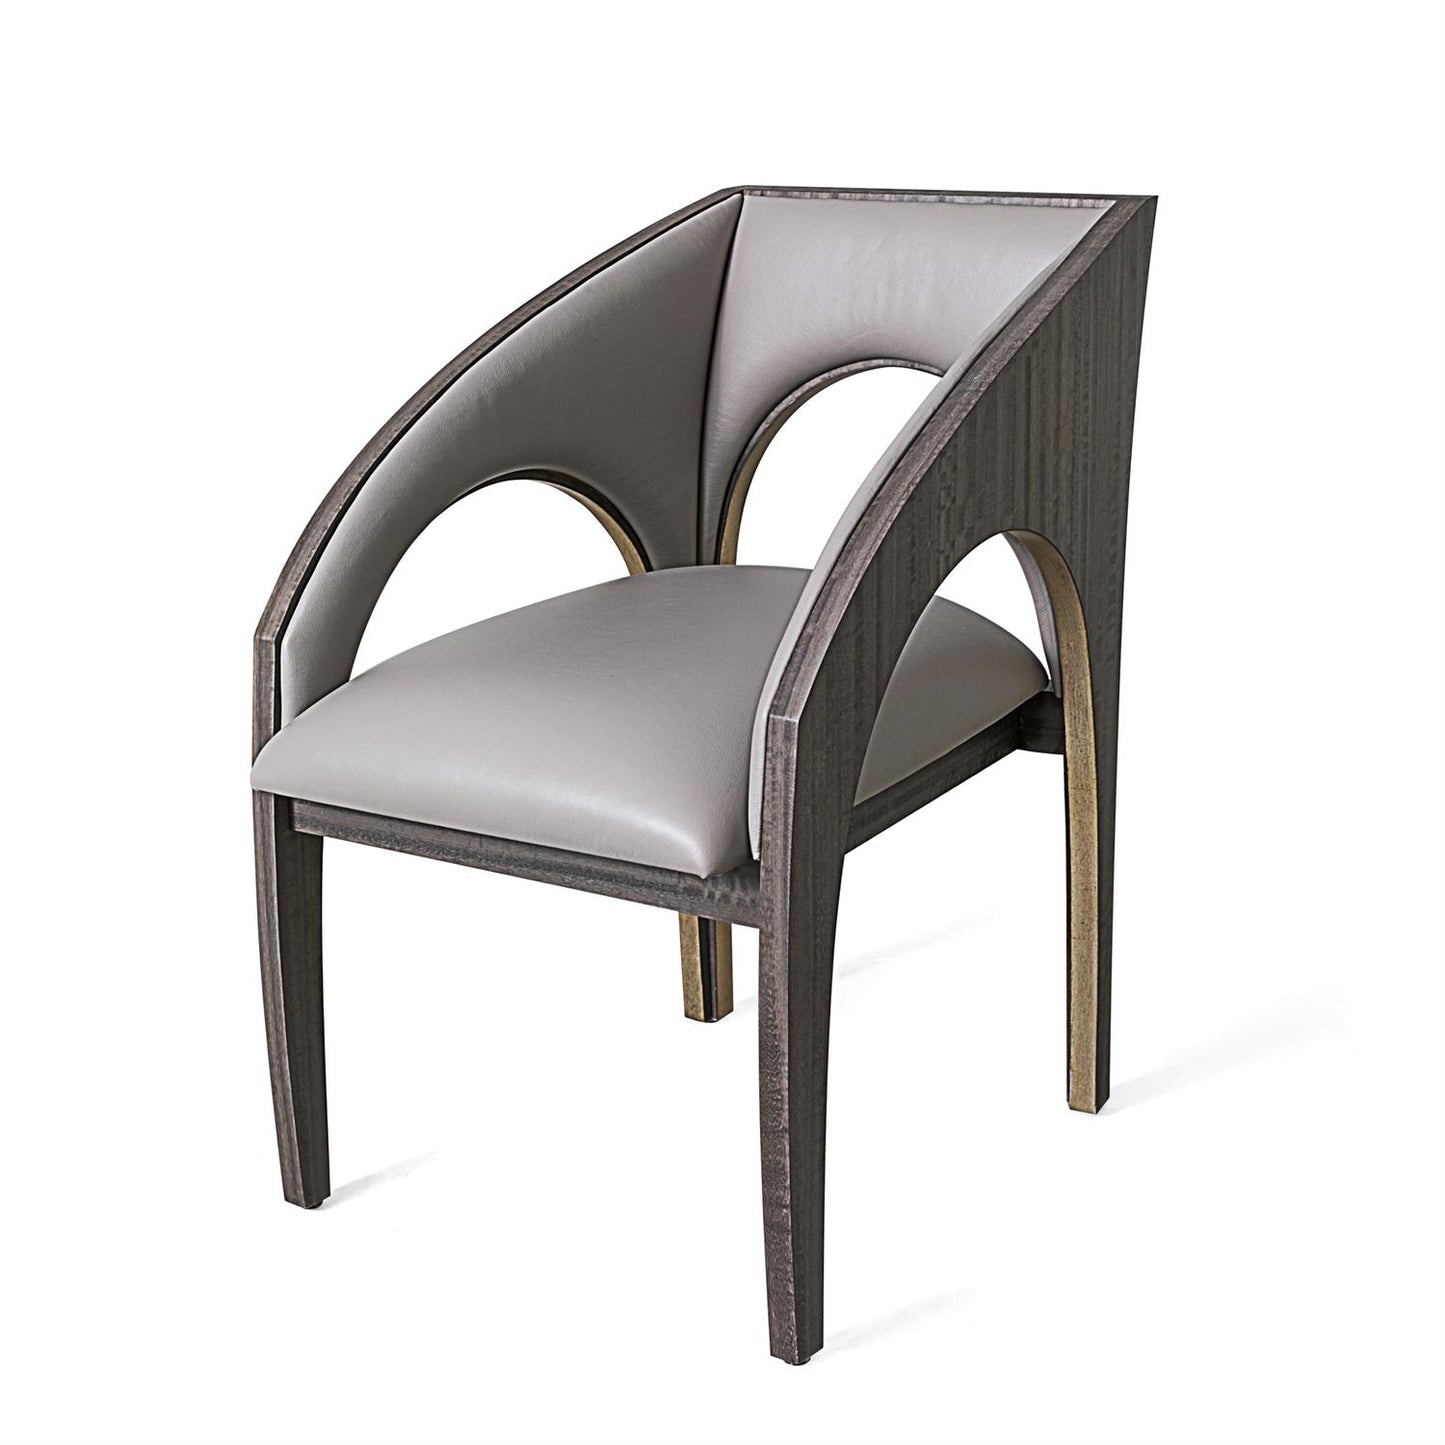 Arches Occasional Chair - Grey Leather - Grats Decor Interior Design & Build Inc.